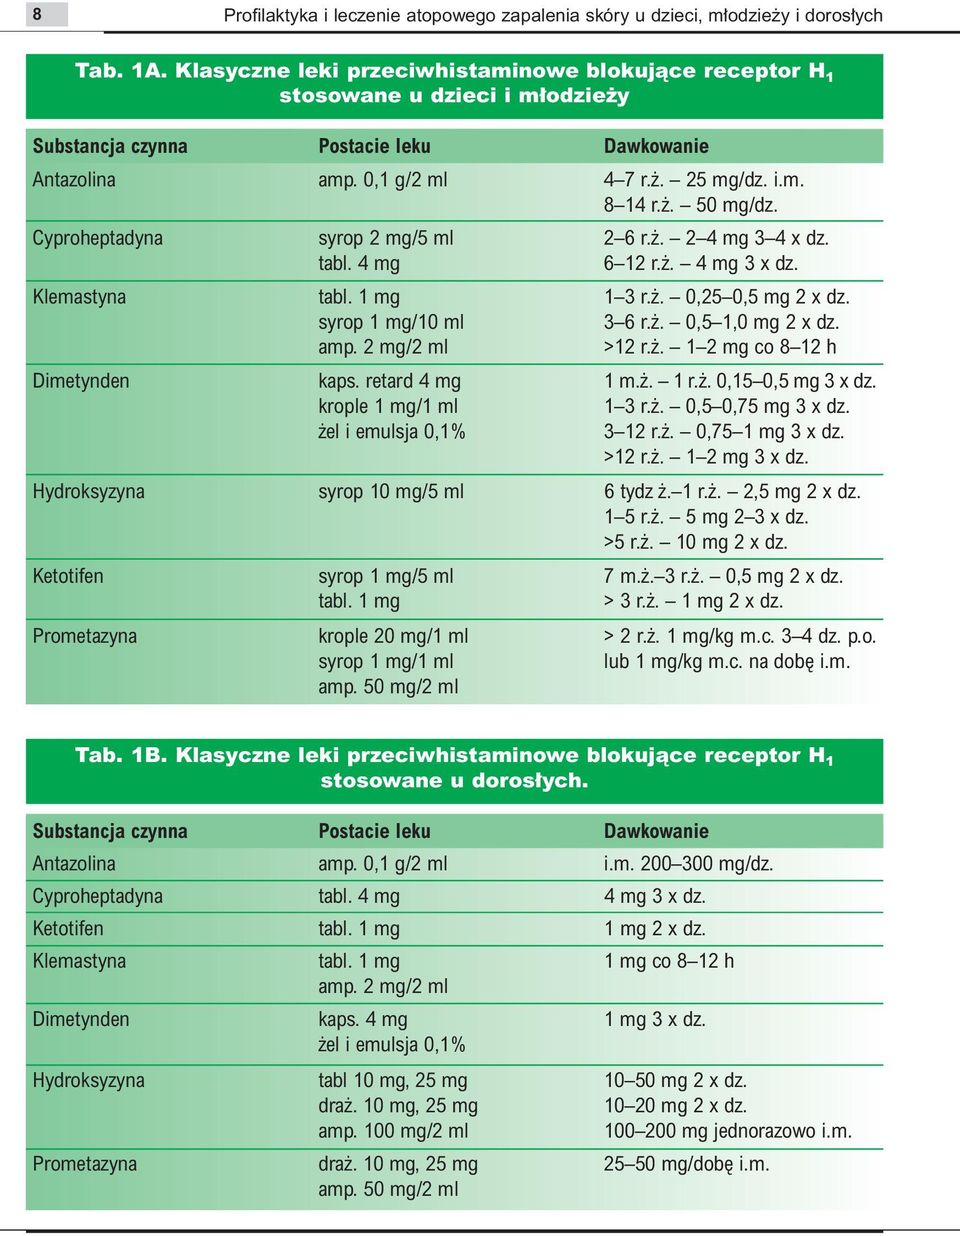 Cyproheptadyna Klemastyna Dimetynden syrop 2 mg/5 ml tabl. 4 mg tabl. 1 mg syrop 1 mg/10 ml amp. 2 mg/2 ml kaps. retard 4 mg krople 1 mg/1 ml el i emulsja 0,1% 2 6 r.. 2 4 mg 3 4 x dz. 6 12 r.